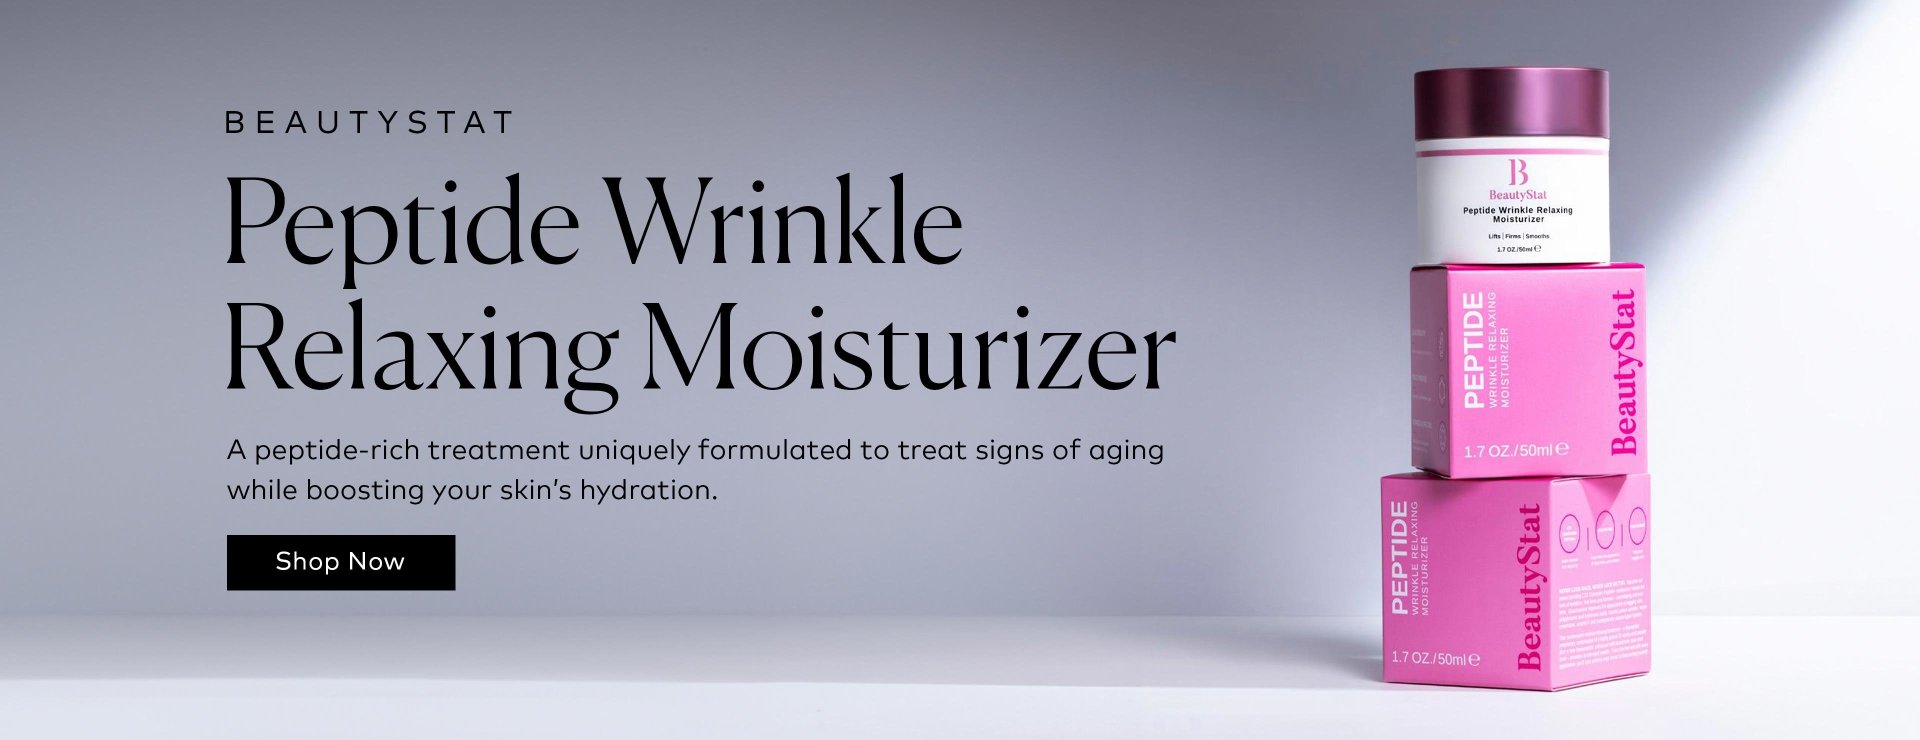 Shop the BeautyStat Peptide Wrinkle Relaxing Moisturizer on Beautylish.com!